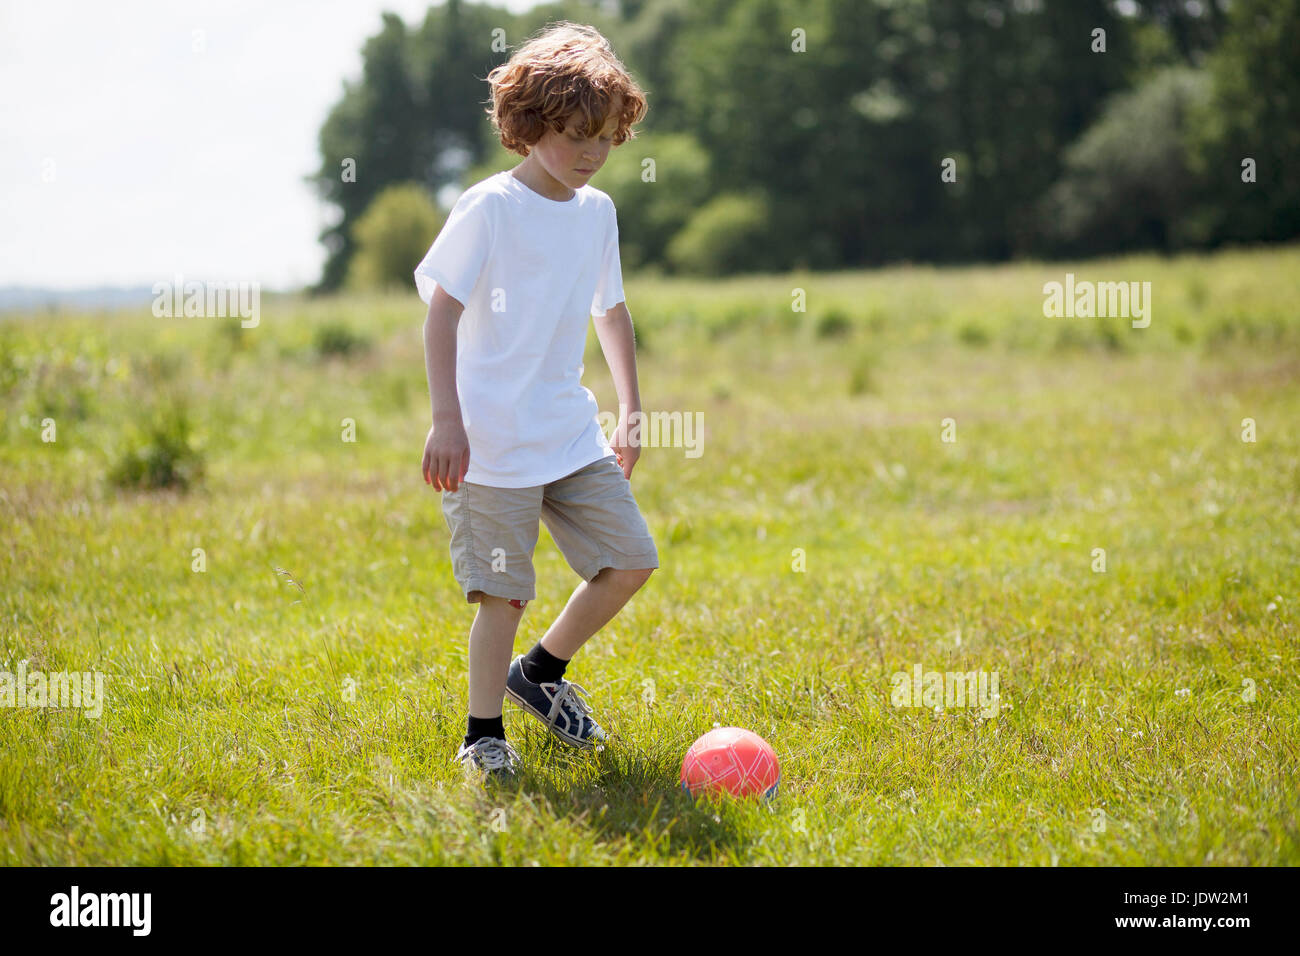 Girl kicking soccer ball in grassy field Stock Photo